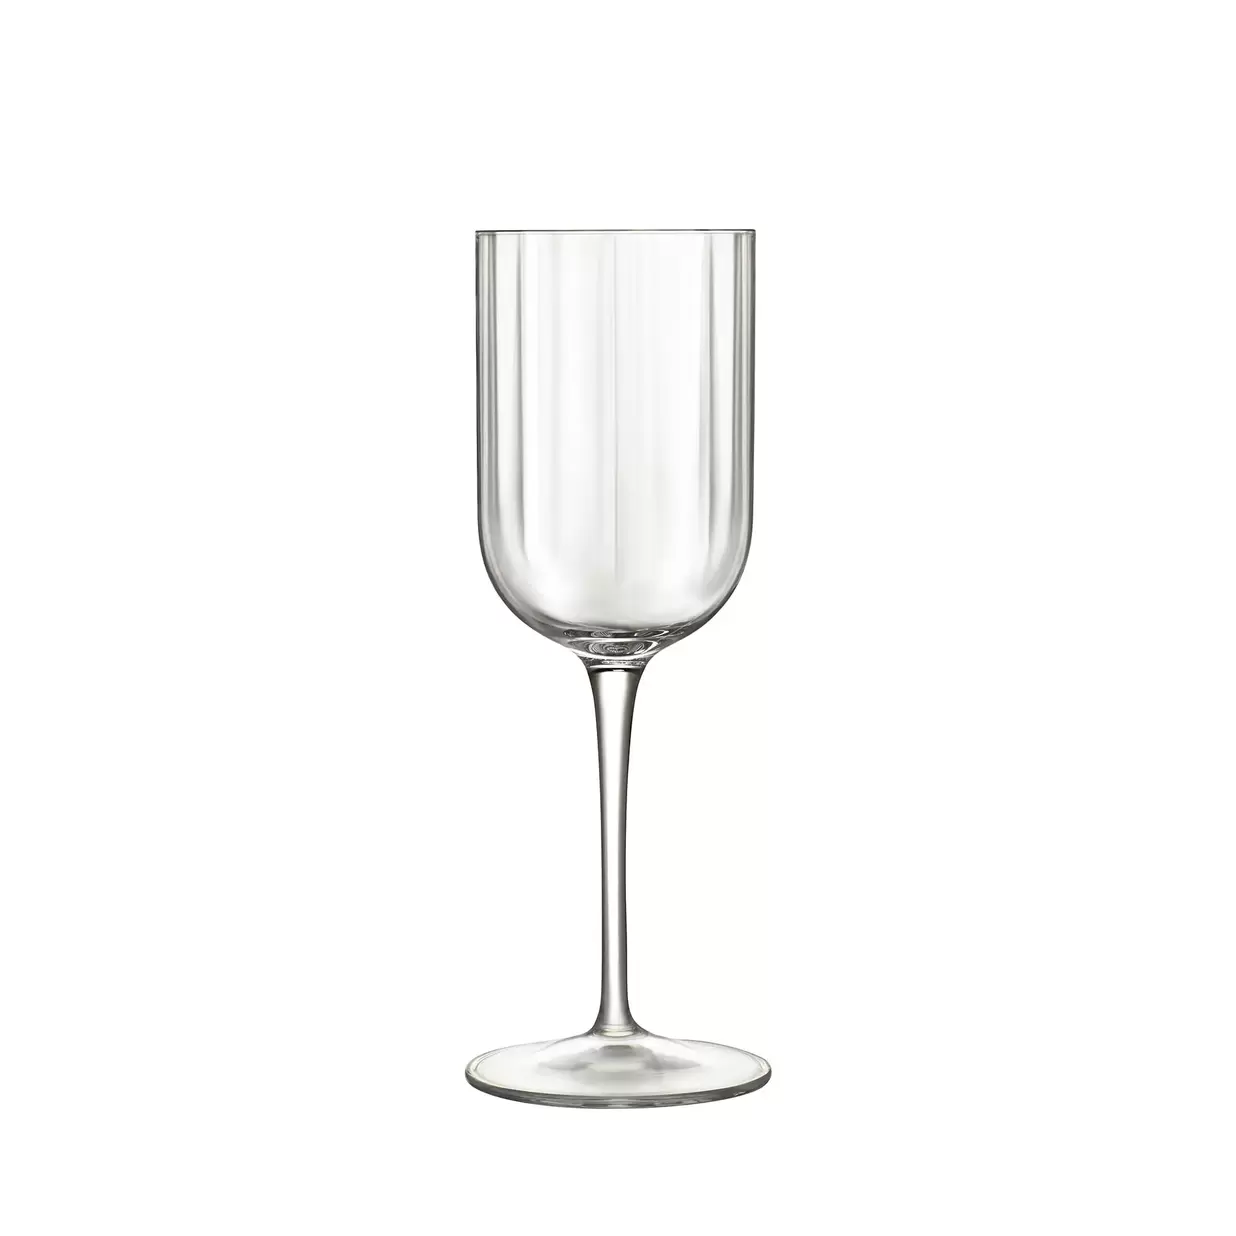 LUIGI BORMIOLI Jazz negroni cocktailglas 4 stk på tilbud til 299,95 kr. hos Sinnerup